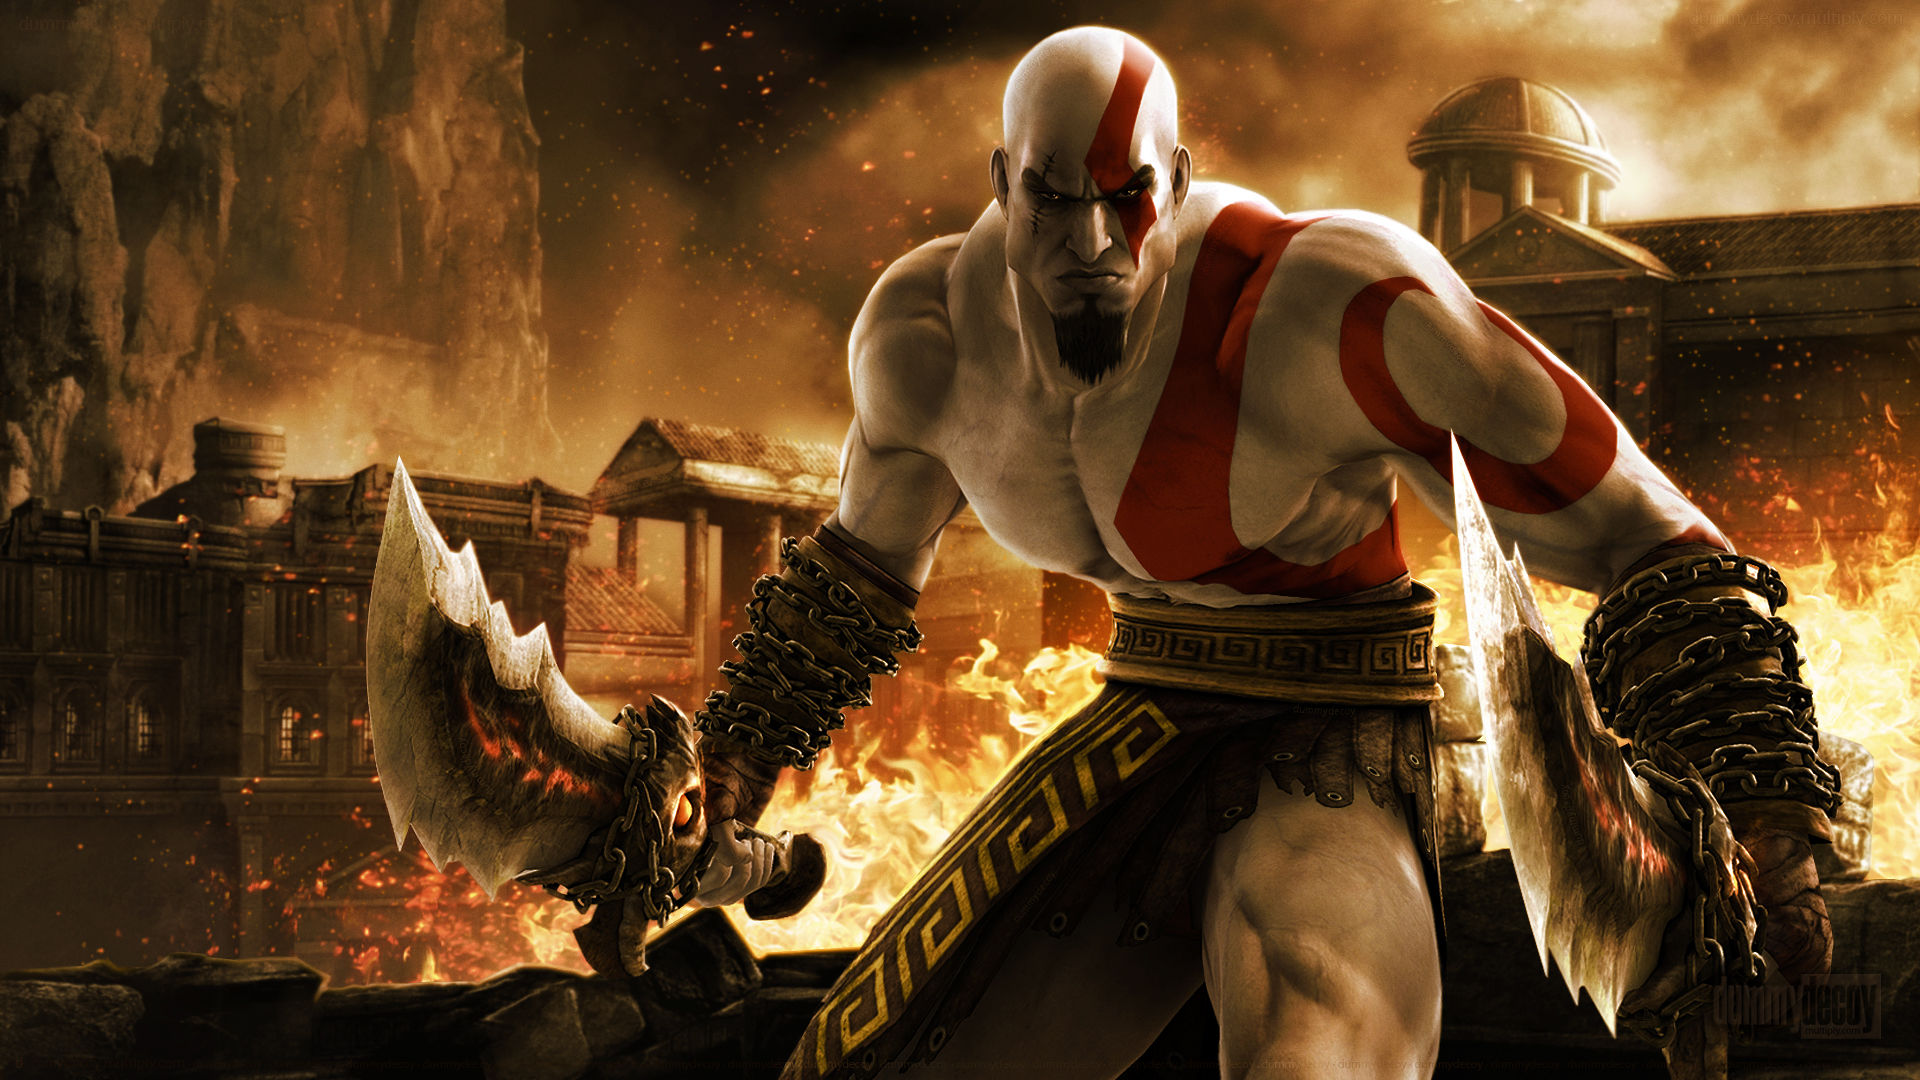 New “God of War” Officially Revealed - Kratos Has a Beard!